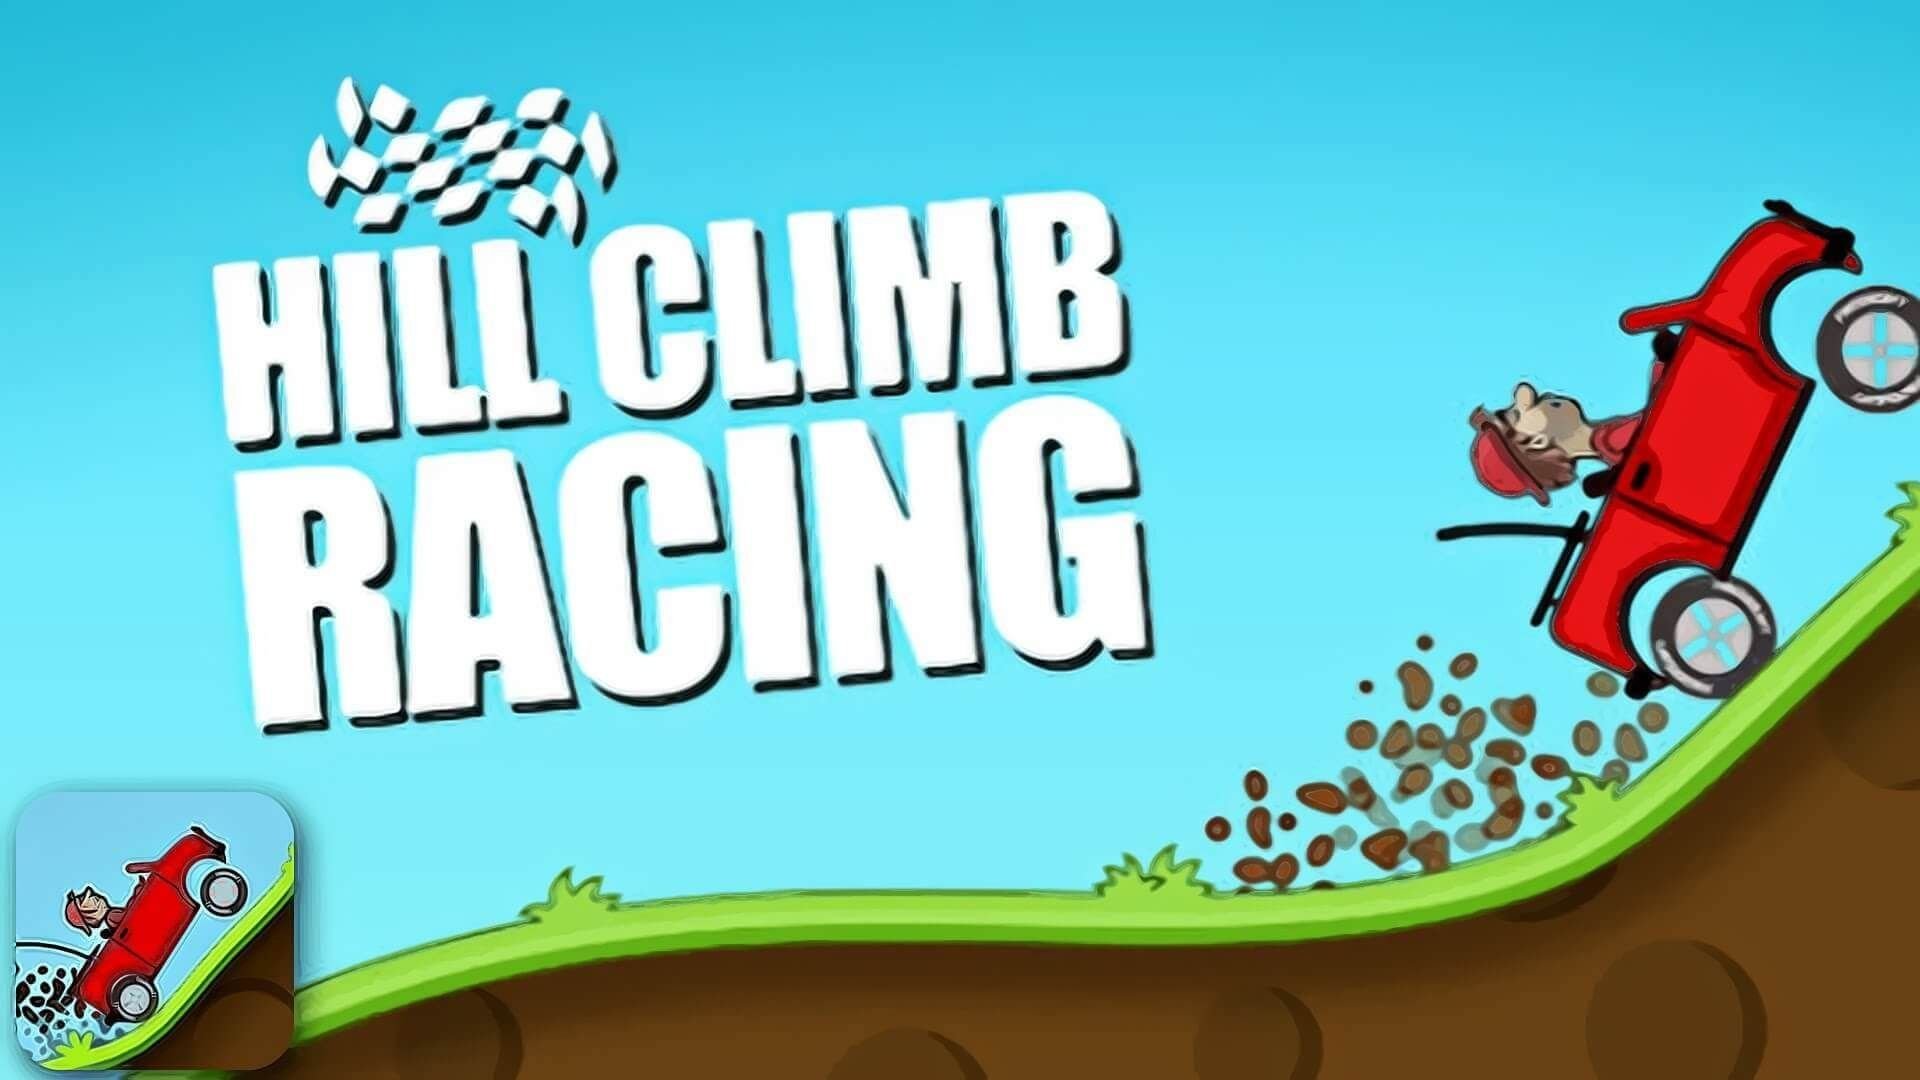 Hill climb racing car. Игра Hill Climb Racing 1. Downhill Racer игра. Хилл Клаймб рейсинг. Значок игры Хилл климб рейсинг.